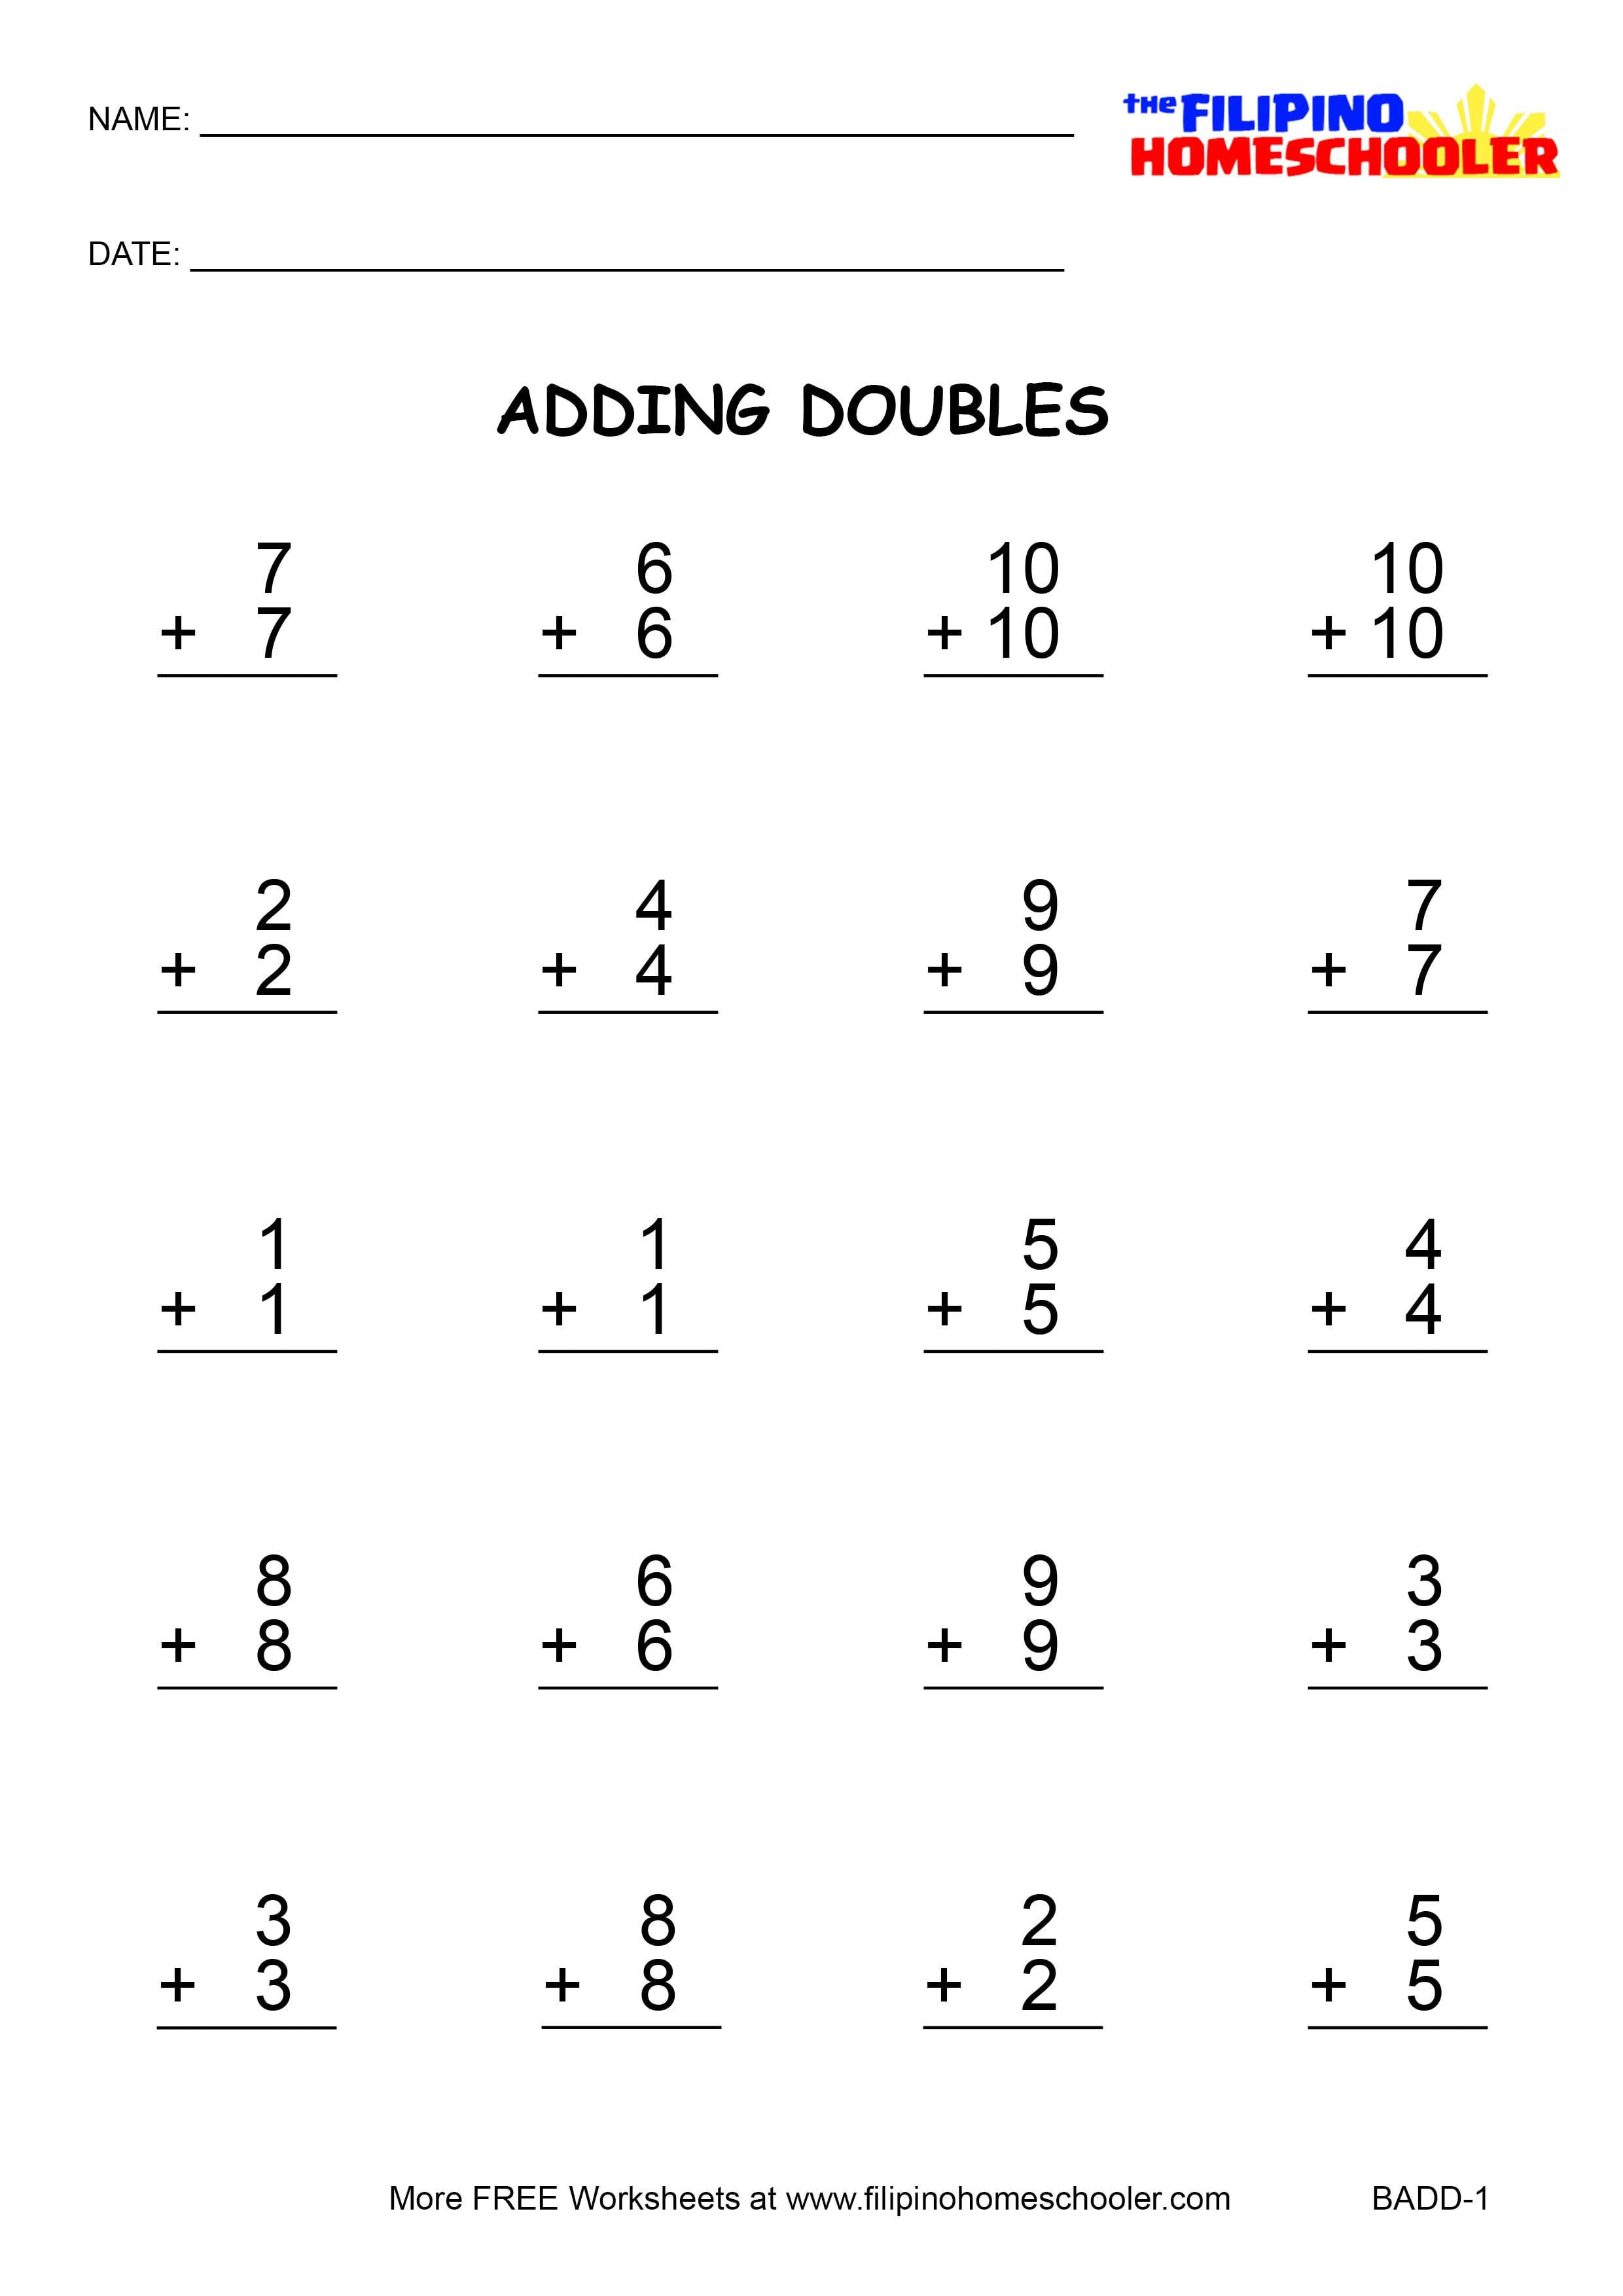 Adding Doubles Worksheet 2nd Grade Adding Doubles Worksheets 2nd Grade